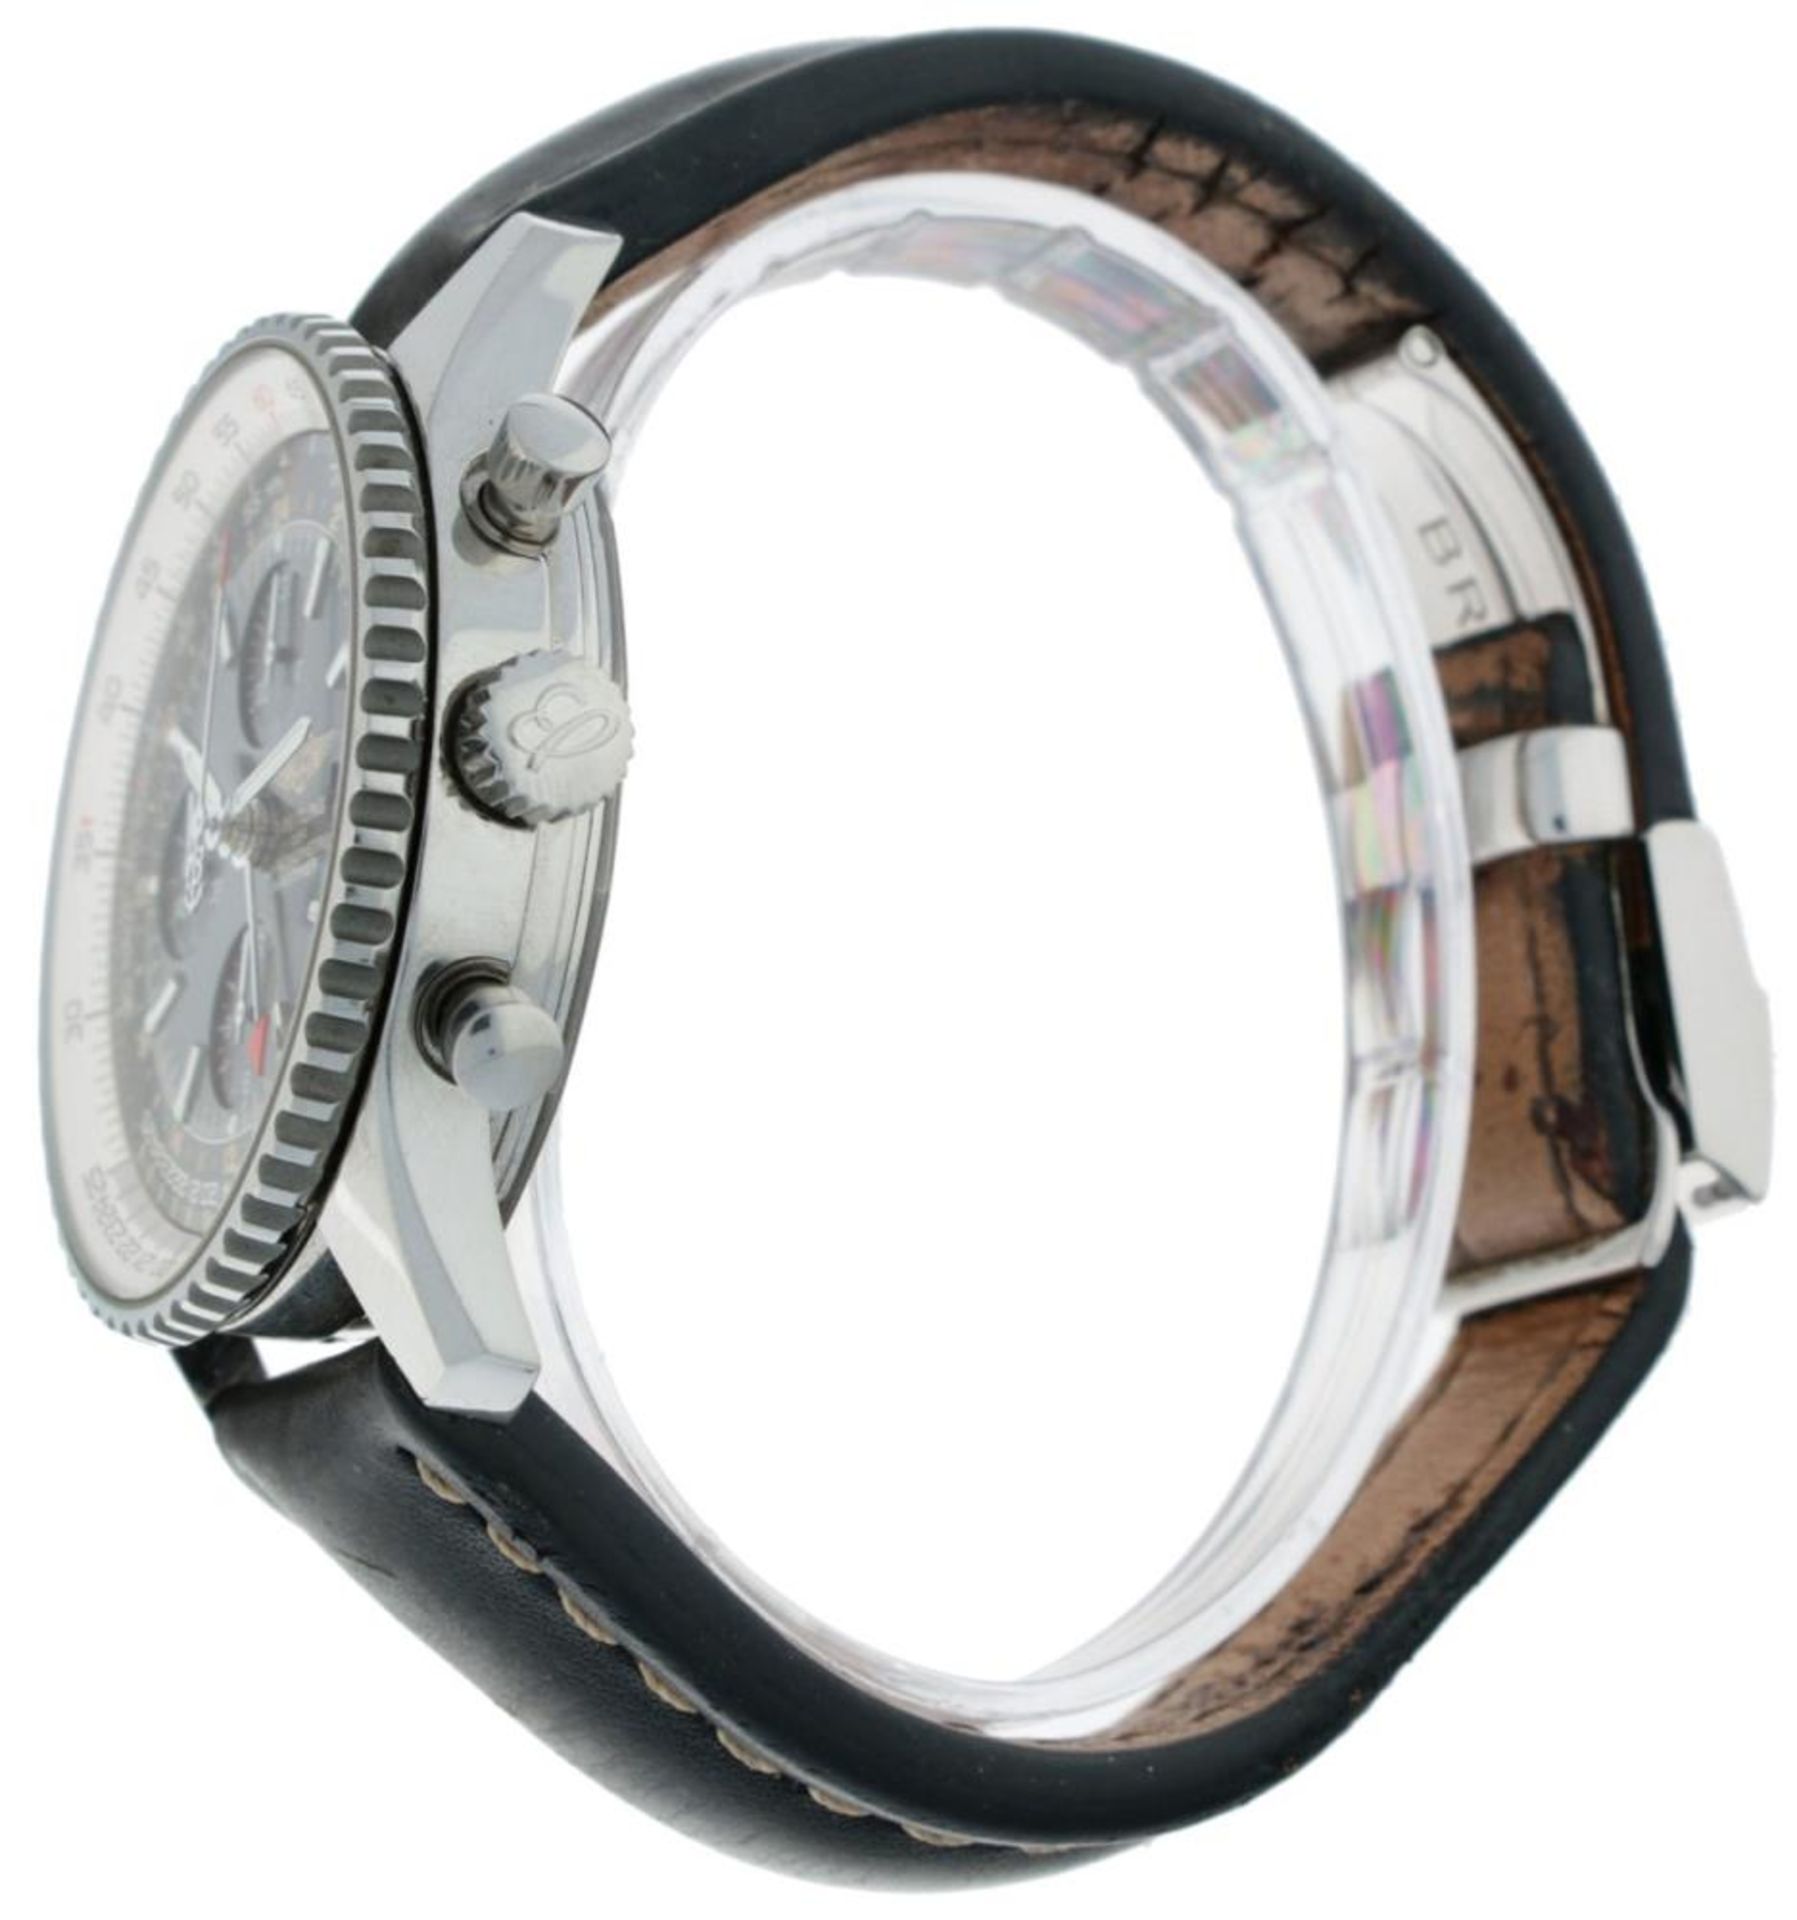 Breitling Navitimer A24322 - Men's watch - 2007. - Image 5 of 6